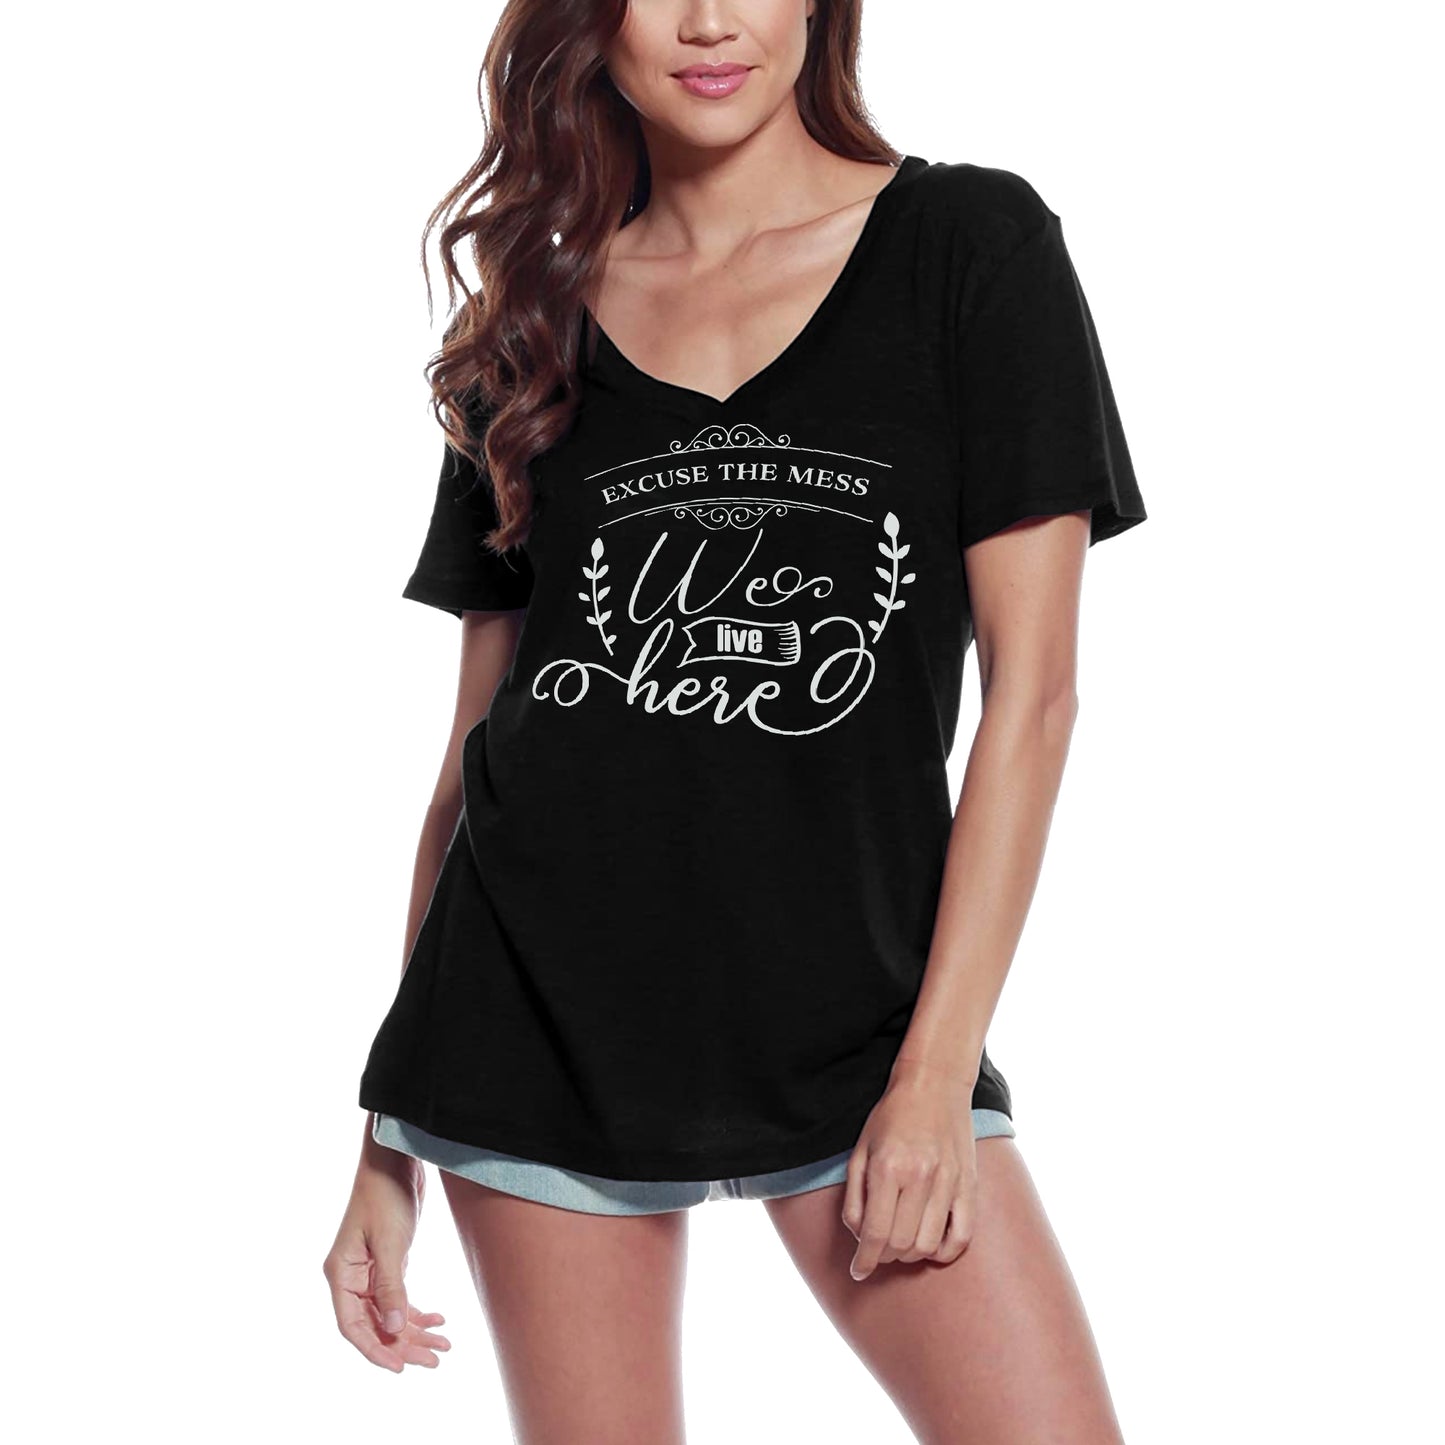 ULTRABASIC Women's T-Shirt Excuse the Mess We Live Here - Short Sleeve Tee Shirt Tops